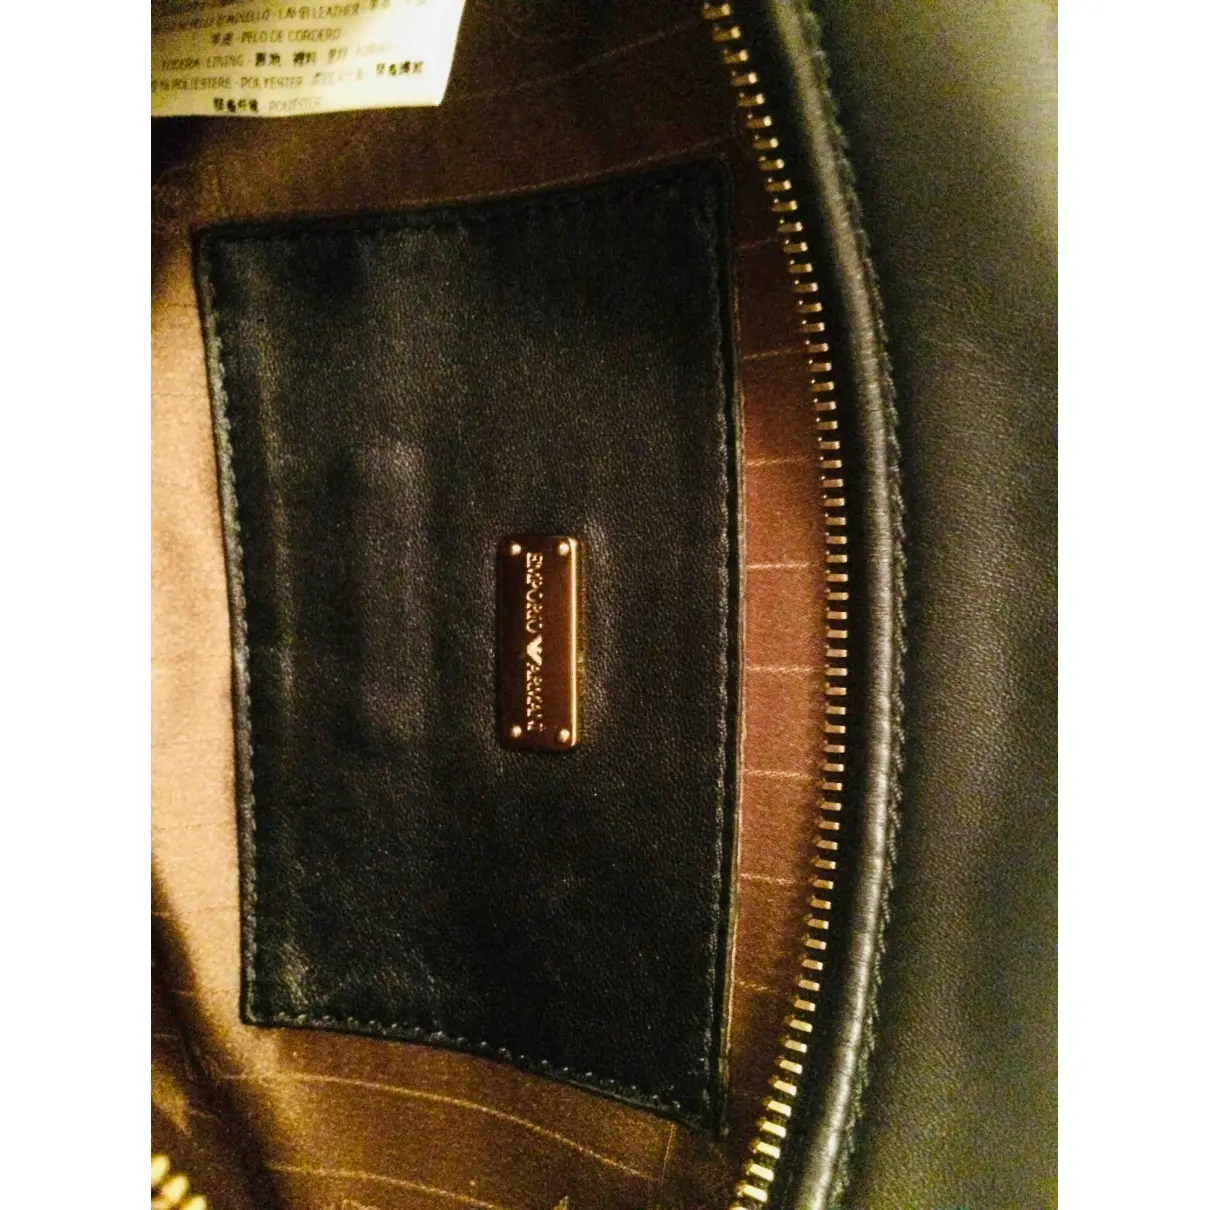 Buy Emporio Armani Leather clutch bag online